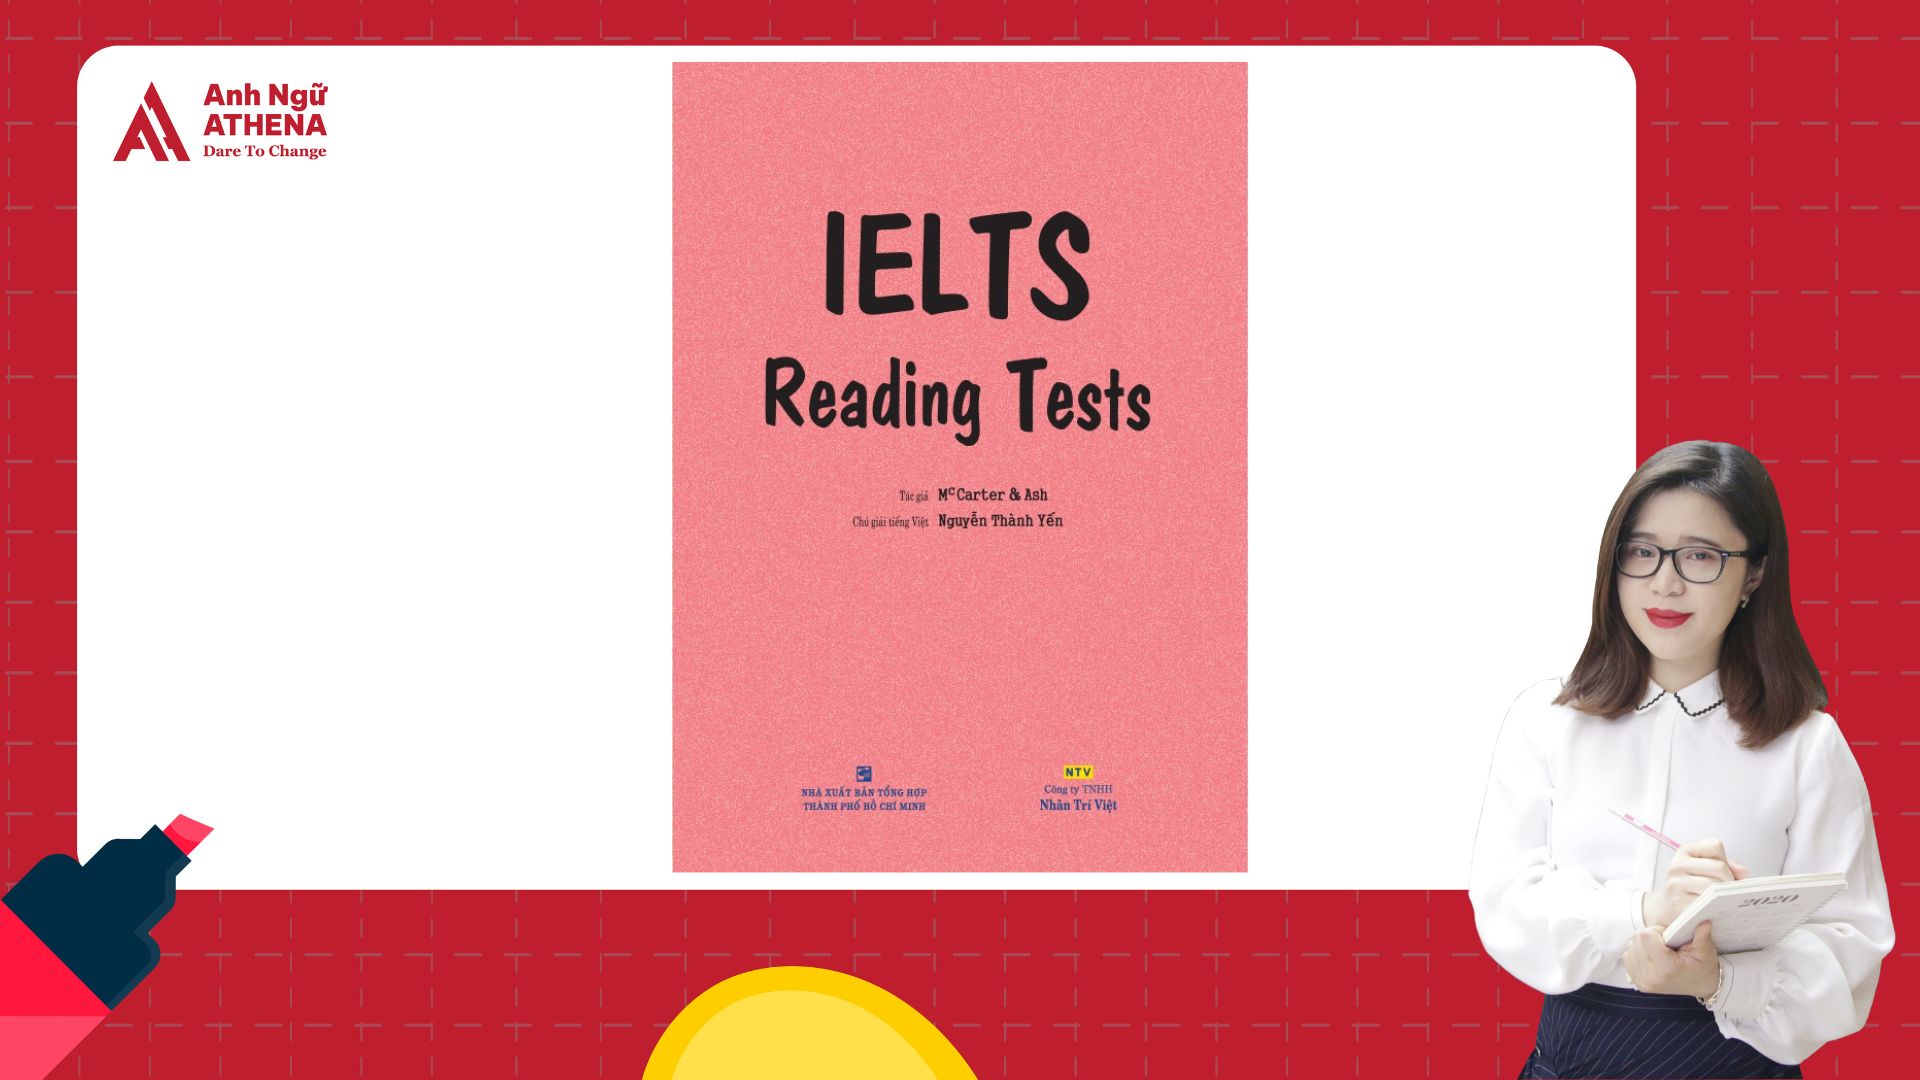 IELTS Reading Tests By Sam McCarter & Judith Ash